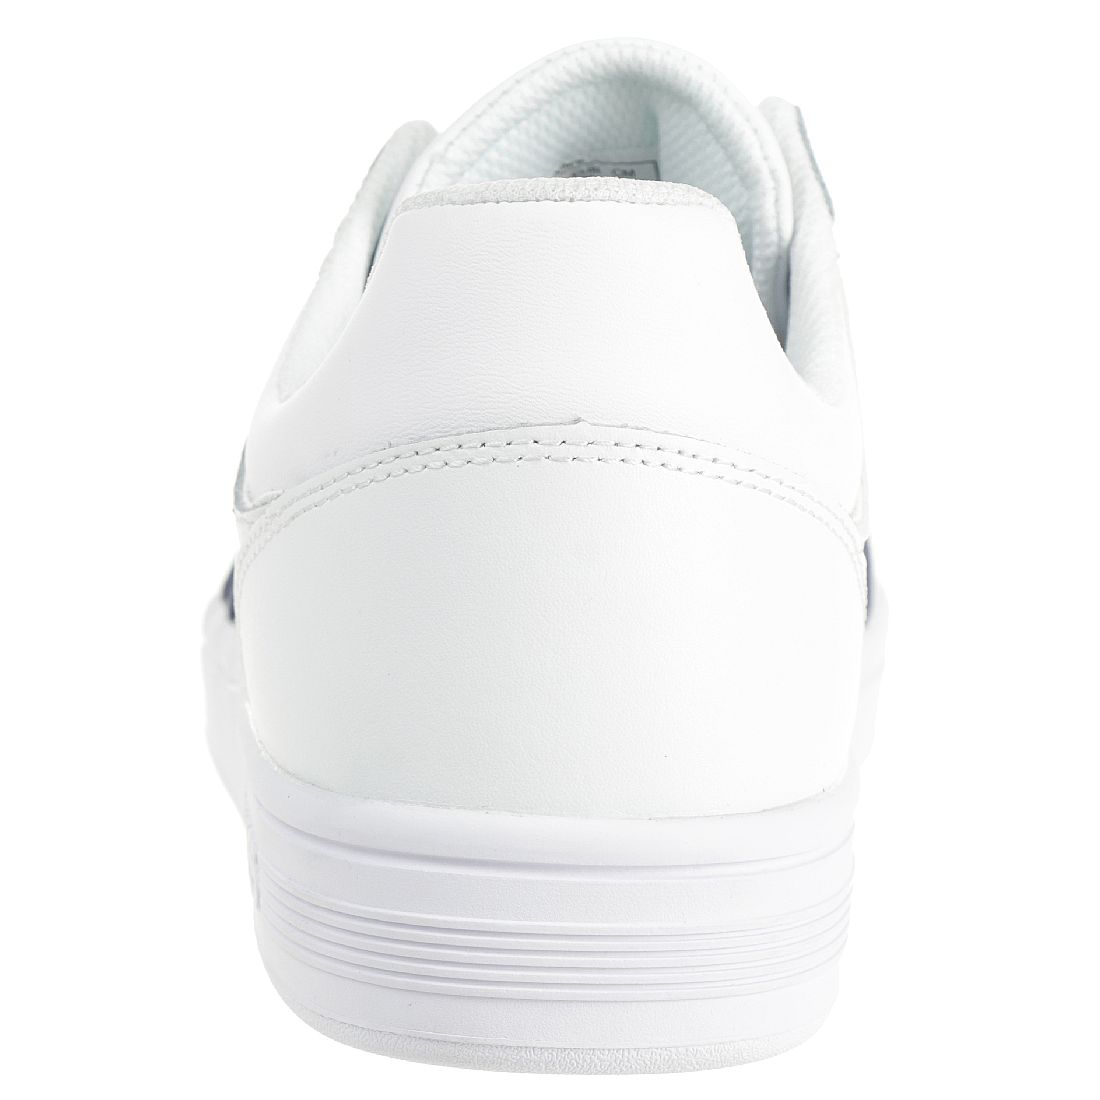 K-SWISS Court Cheswick Schuhe Sneaker weiss schwarz 05585-126-M